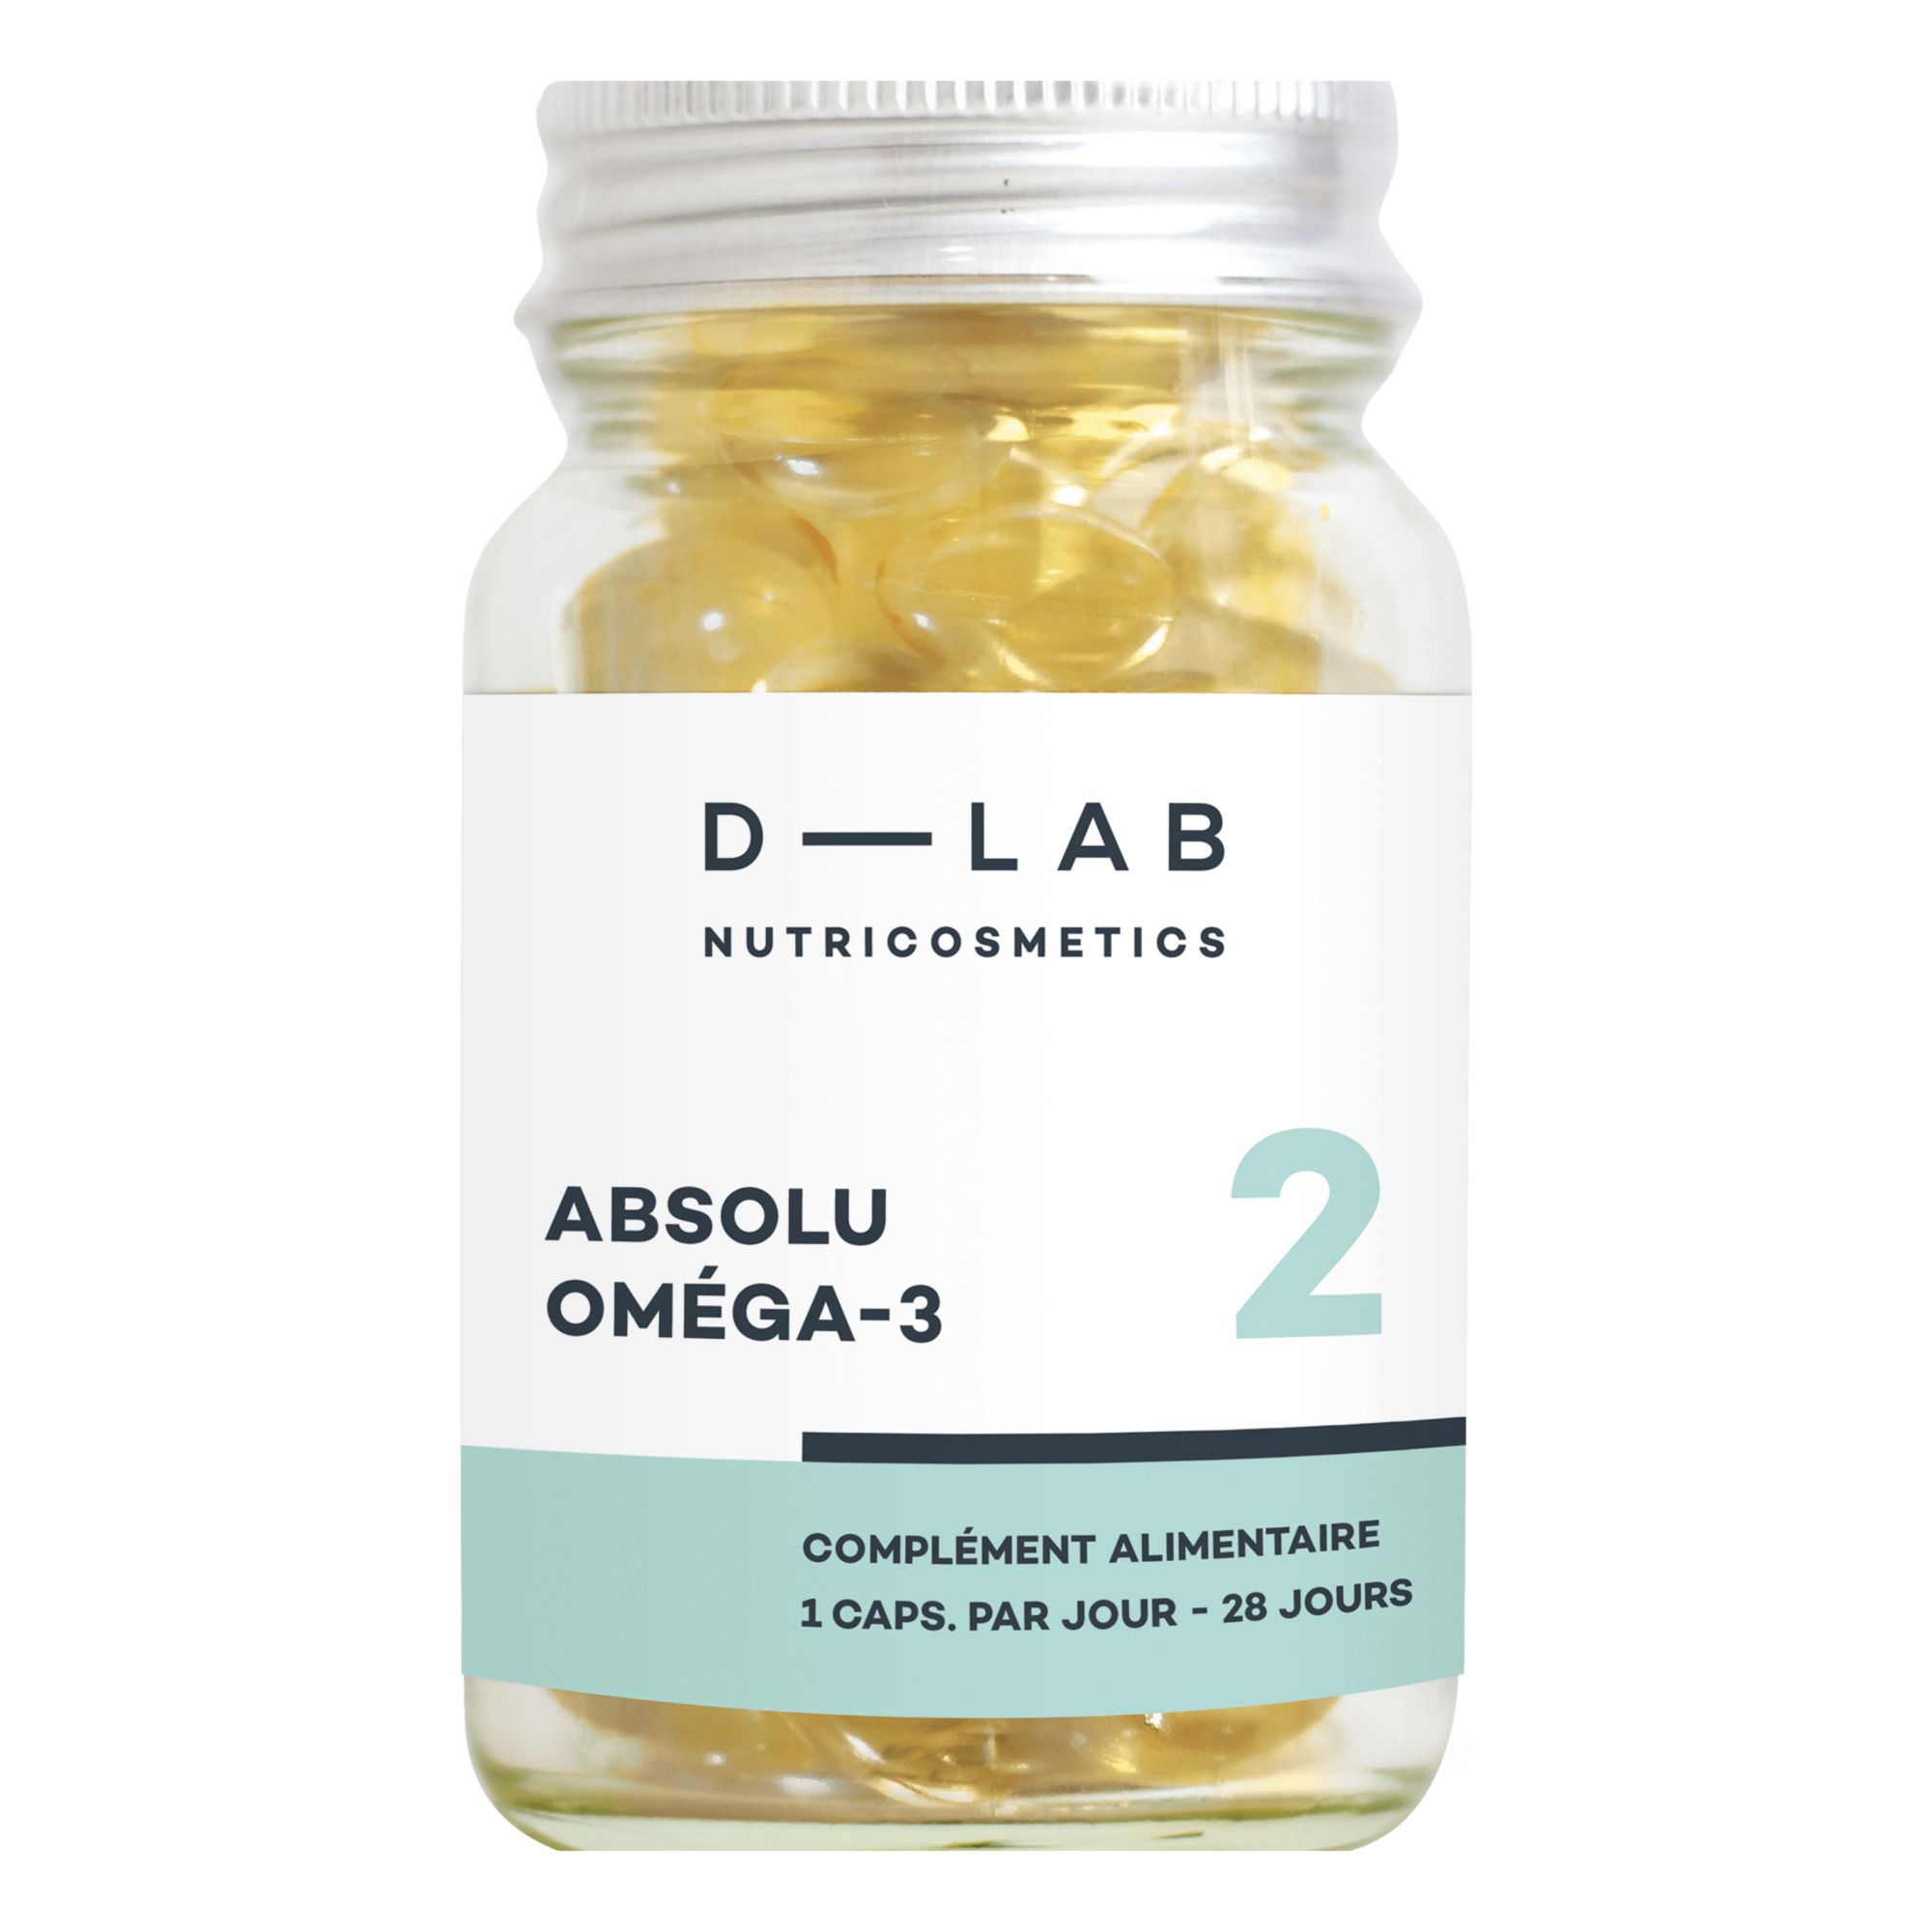 D-LAB NUTRICOSMETICS - Absolu Oméga-3  Complément alimentaire - 1 mois